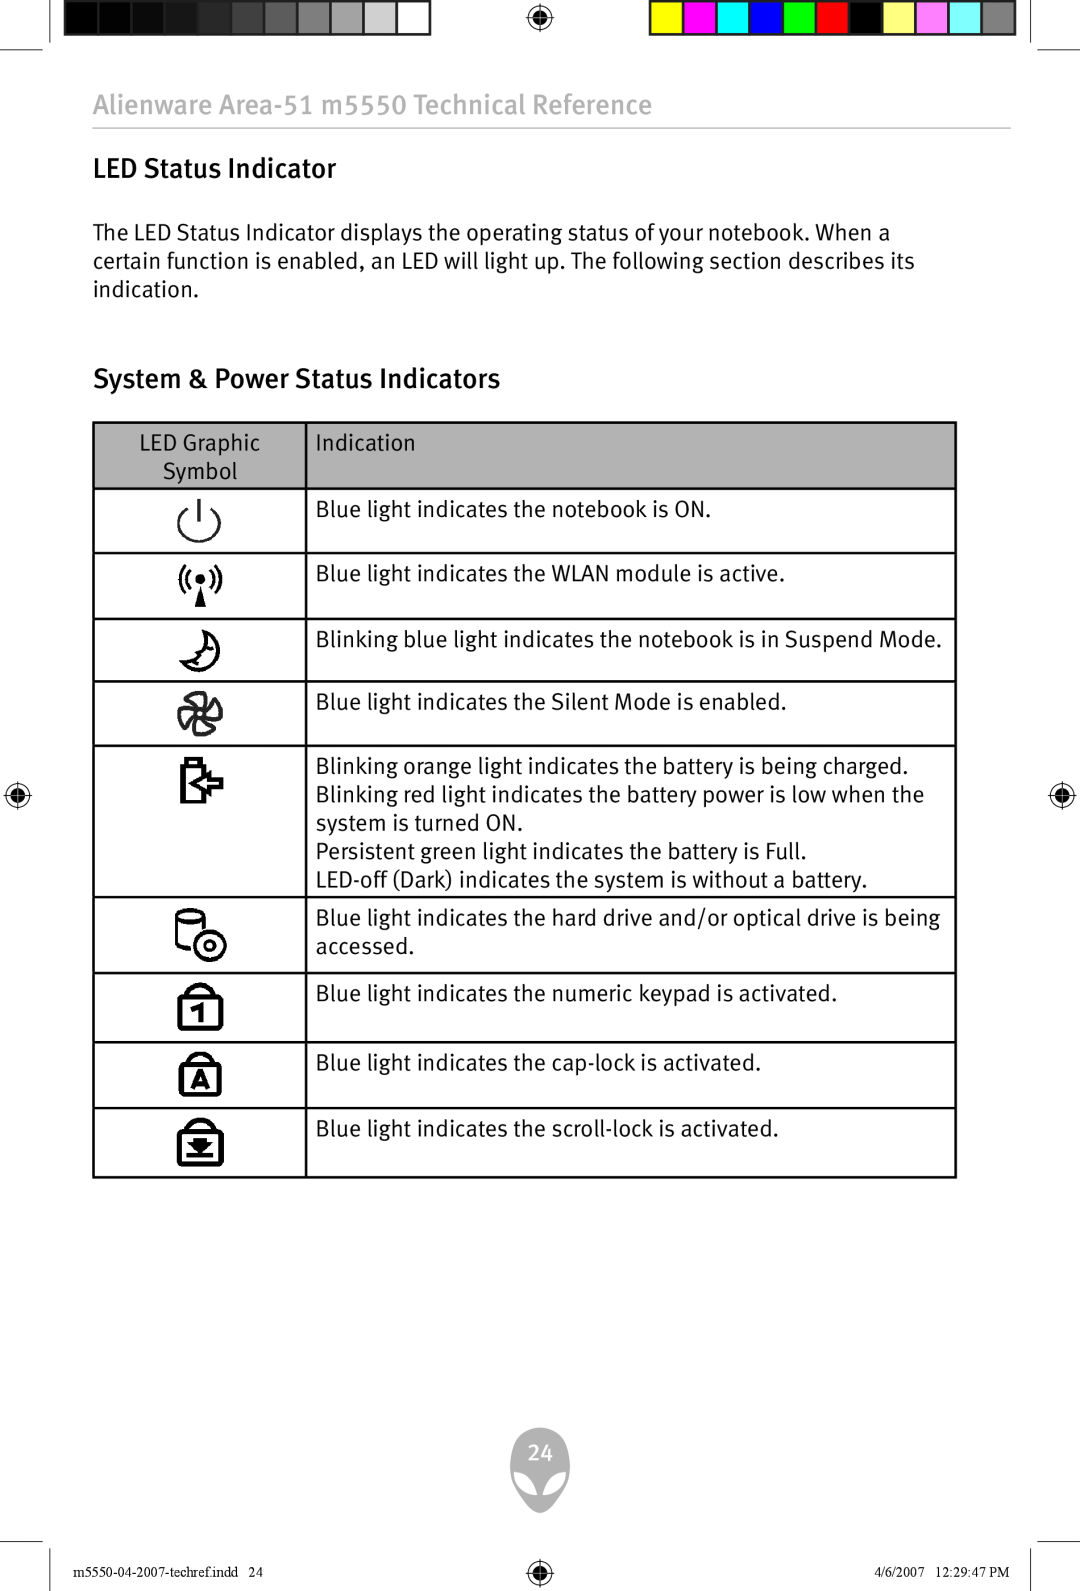 Alienware LED Status Indicator, System & Power Status Indicators, Alienware Area-51 m5550 Technical Reference 